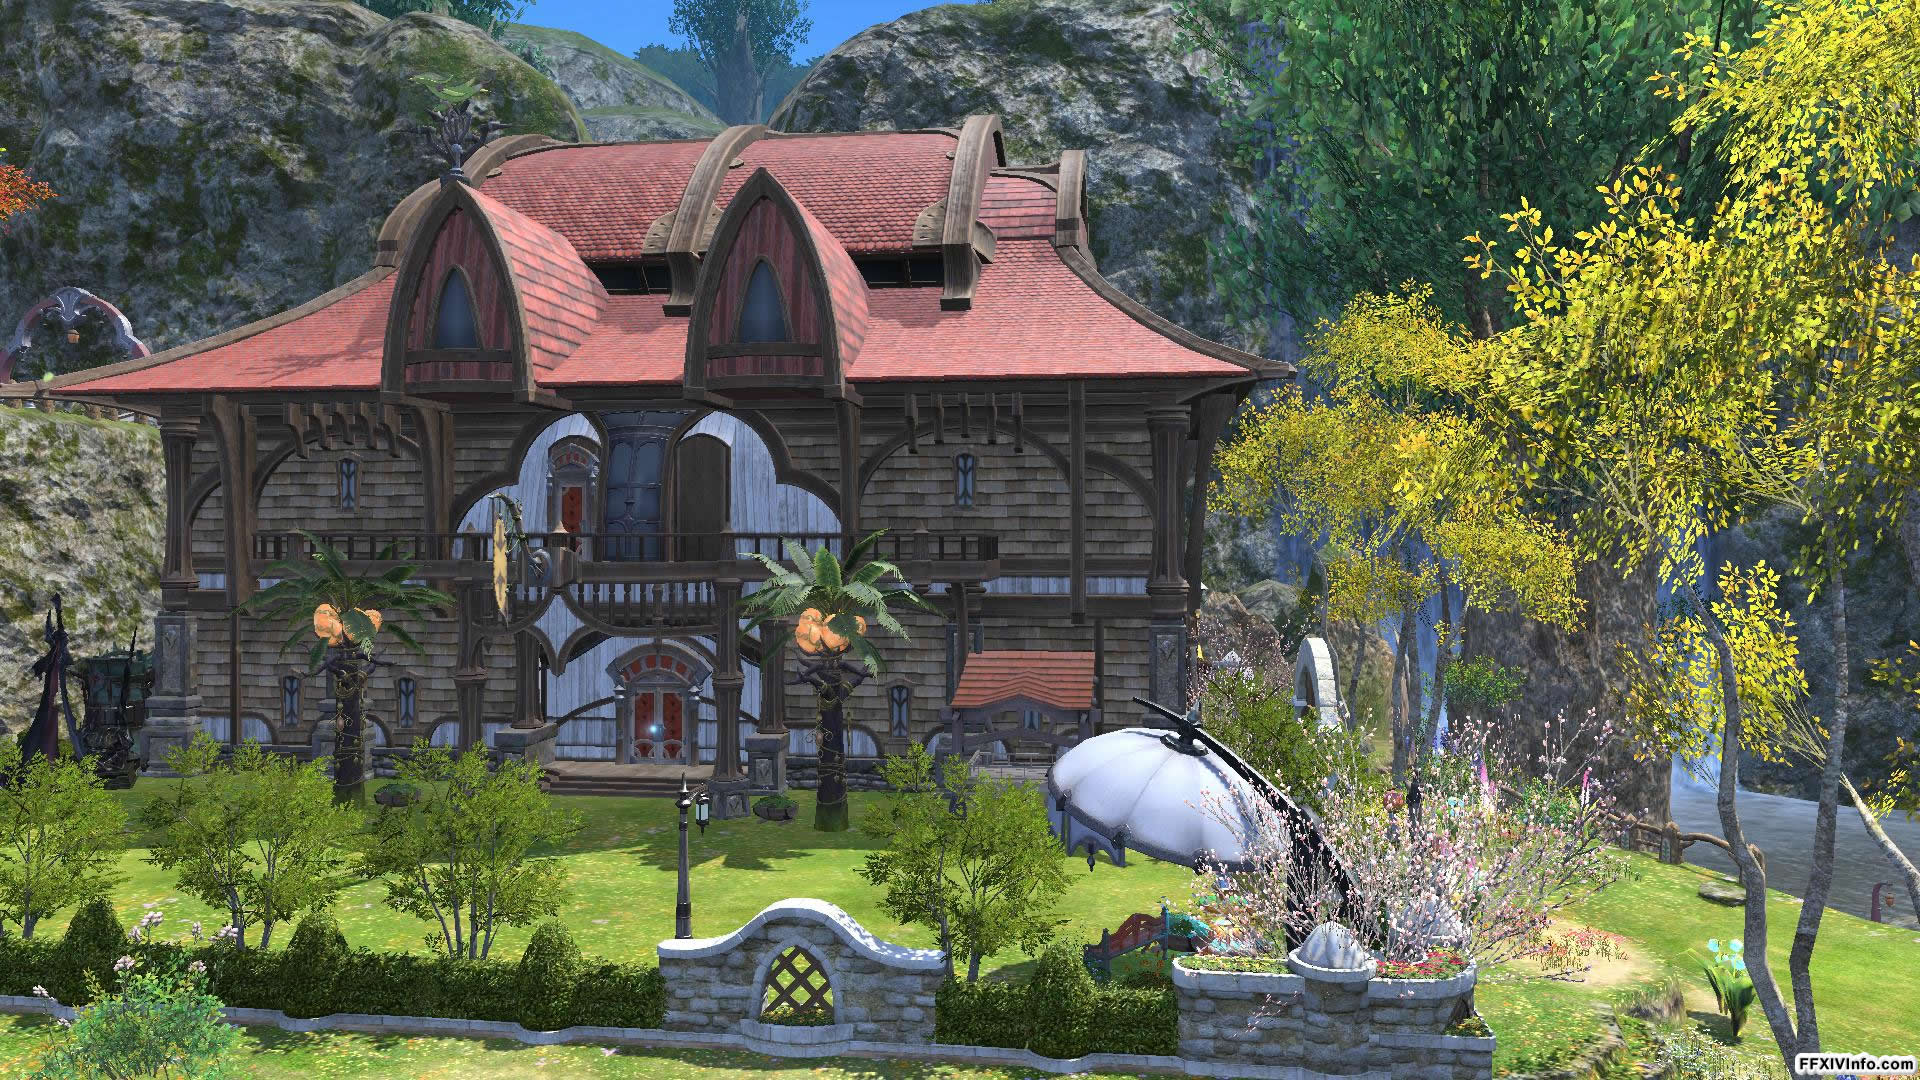 Pembelian Rumah di Final Fantasy XIV Dihentikan Sementara